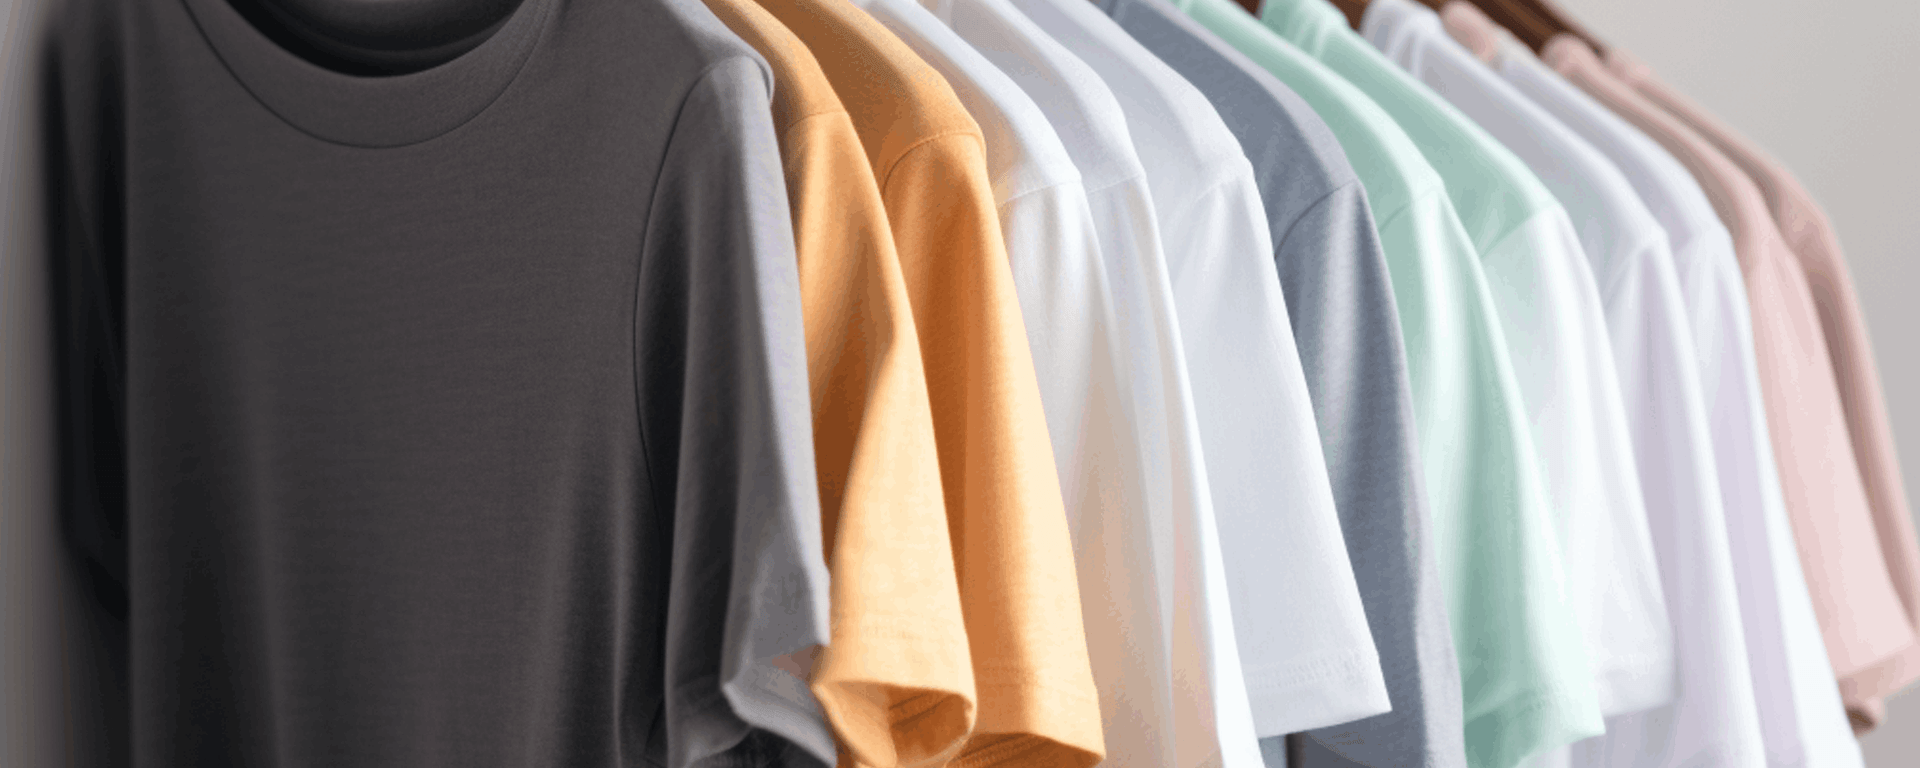 Plain T-Shirts - Wholesale T-Shirts - UK Leading Wholesale Supplier